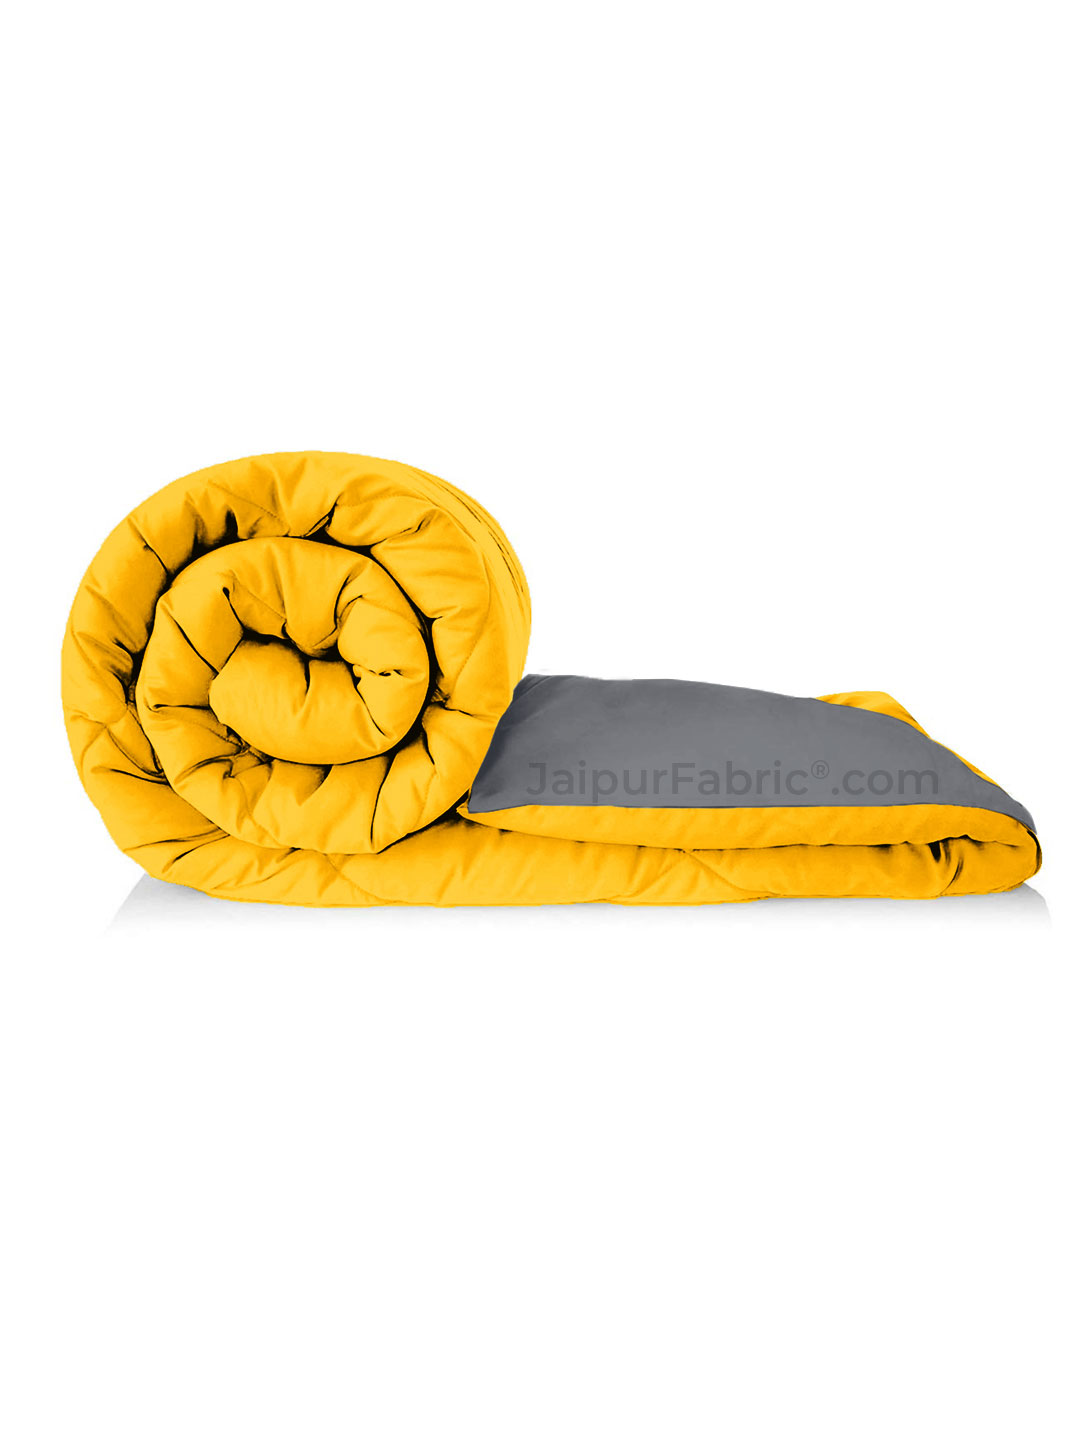 Mango Yellow Light Grey Single Bed Comforter